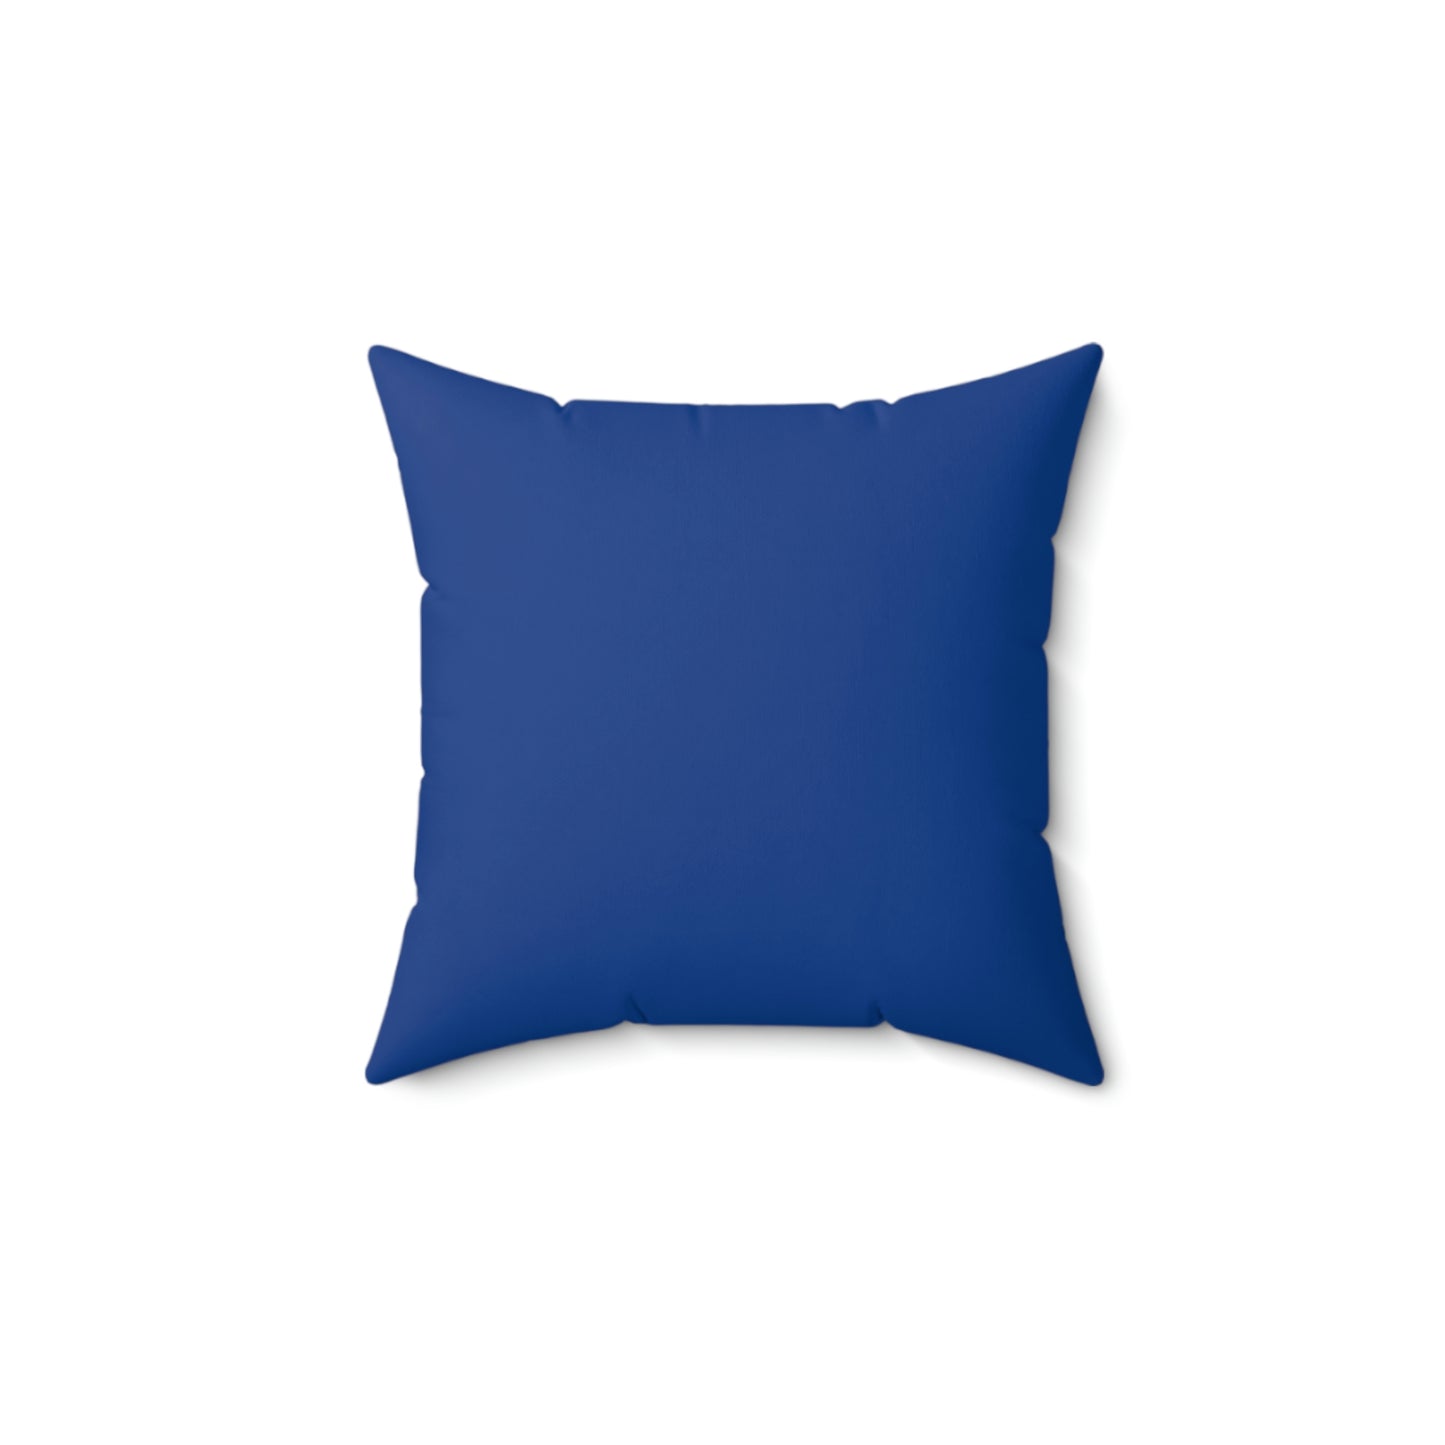 Spun Polyester Square Pillow Case “Lemon Bicycle on Dark Blue”